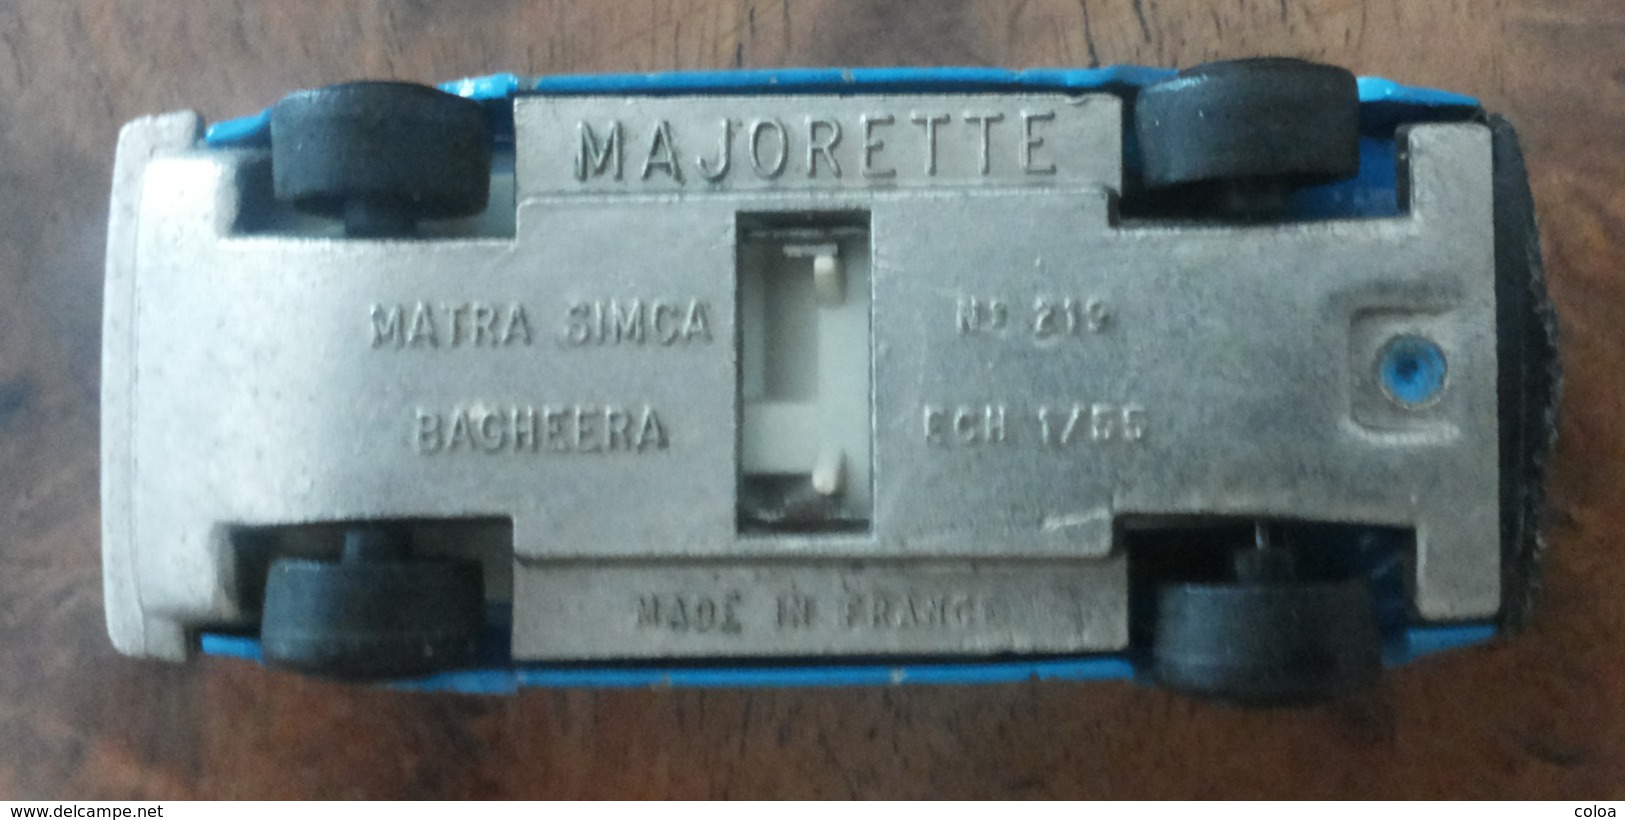 MAJORETTE Matra Simca Bagheera - Majorette